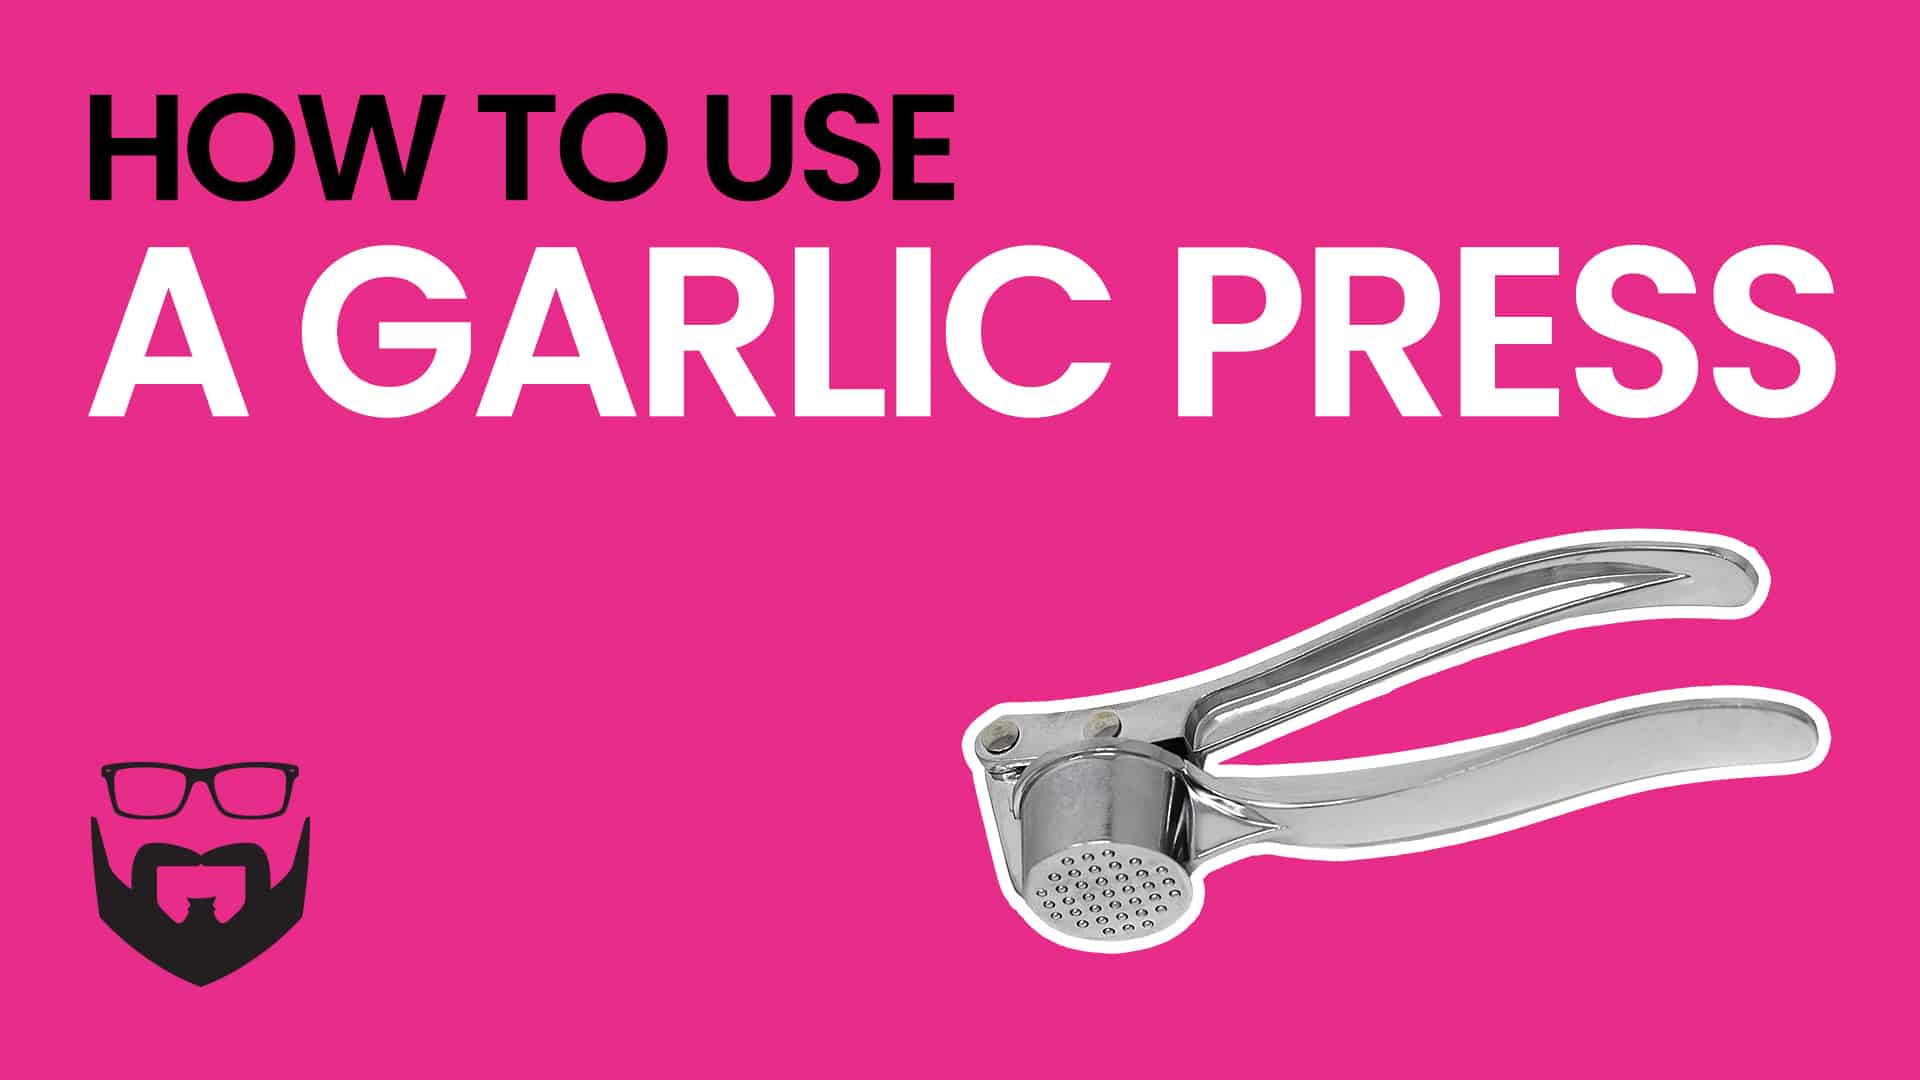 https://jerryjamesstone.com/wp-content/uploads/2022/12/How-to-Use-a-Garlic-Press-Video-Pink.jpg